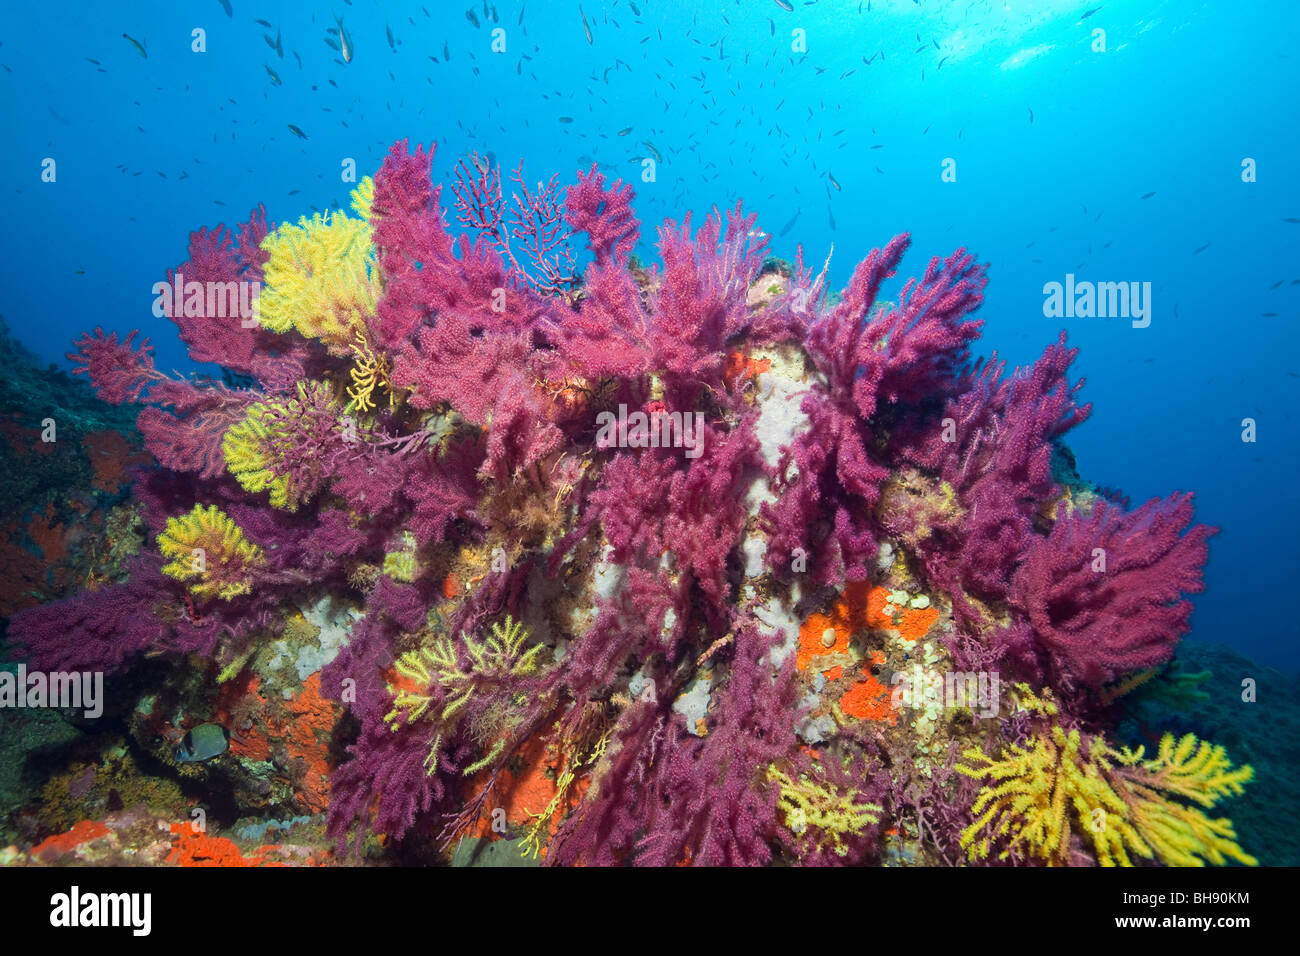 Colorful Reef with Gorgonians, Paramuricea clavata, Carall Bernat, Medes Islands, Costa Brava, Mediterranean Sea, Spain Stock Photo